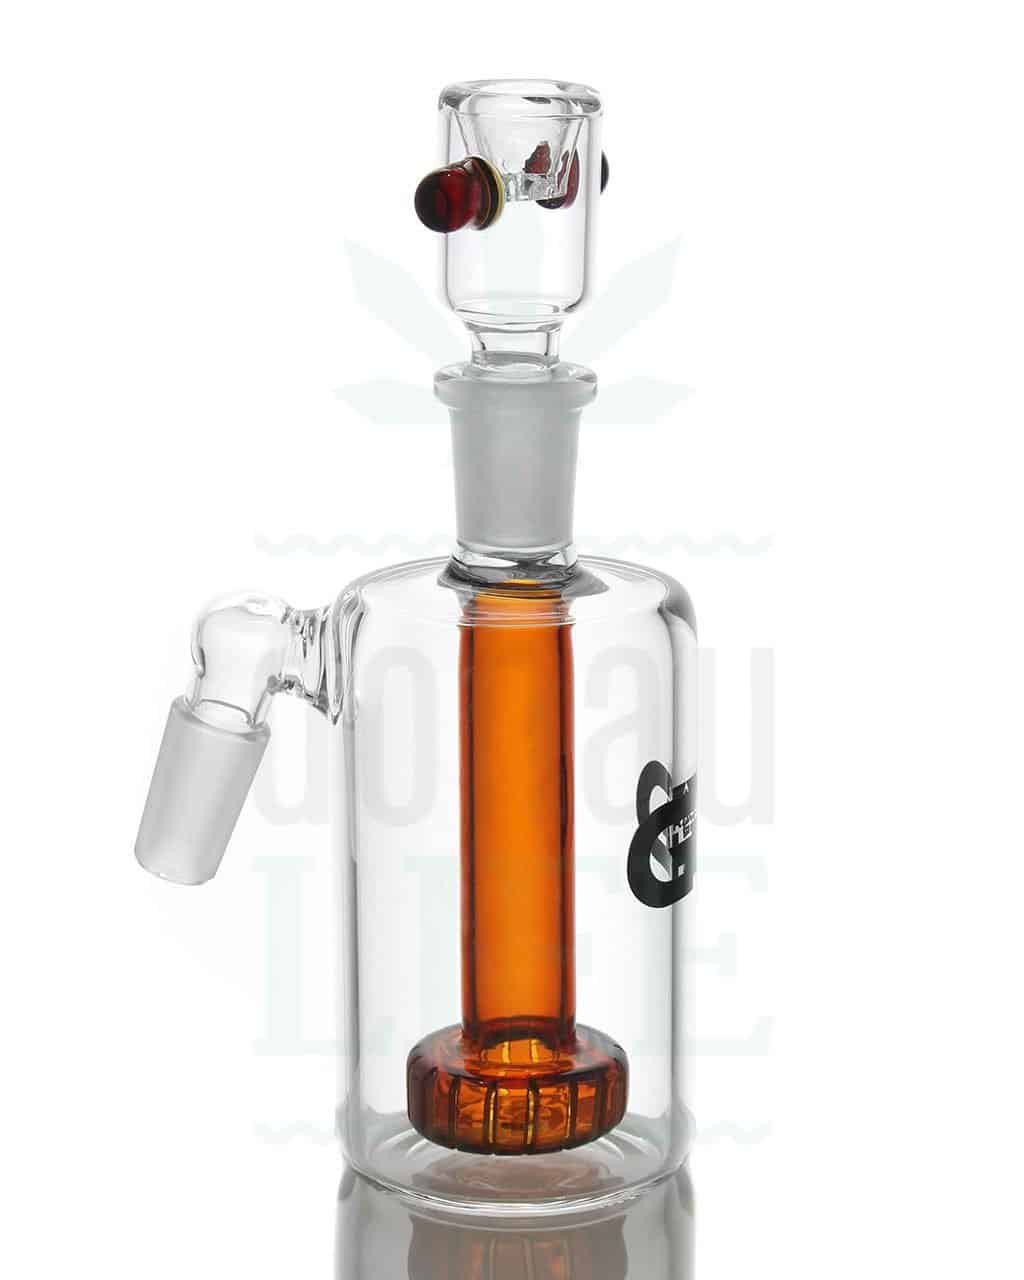 nach Hersteller GRACE GLASS Vorkühler ‘Bottle’ O.G. Series Edition 45° | 14,5&gt;14,5mm